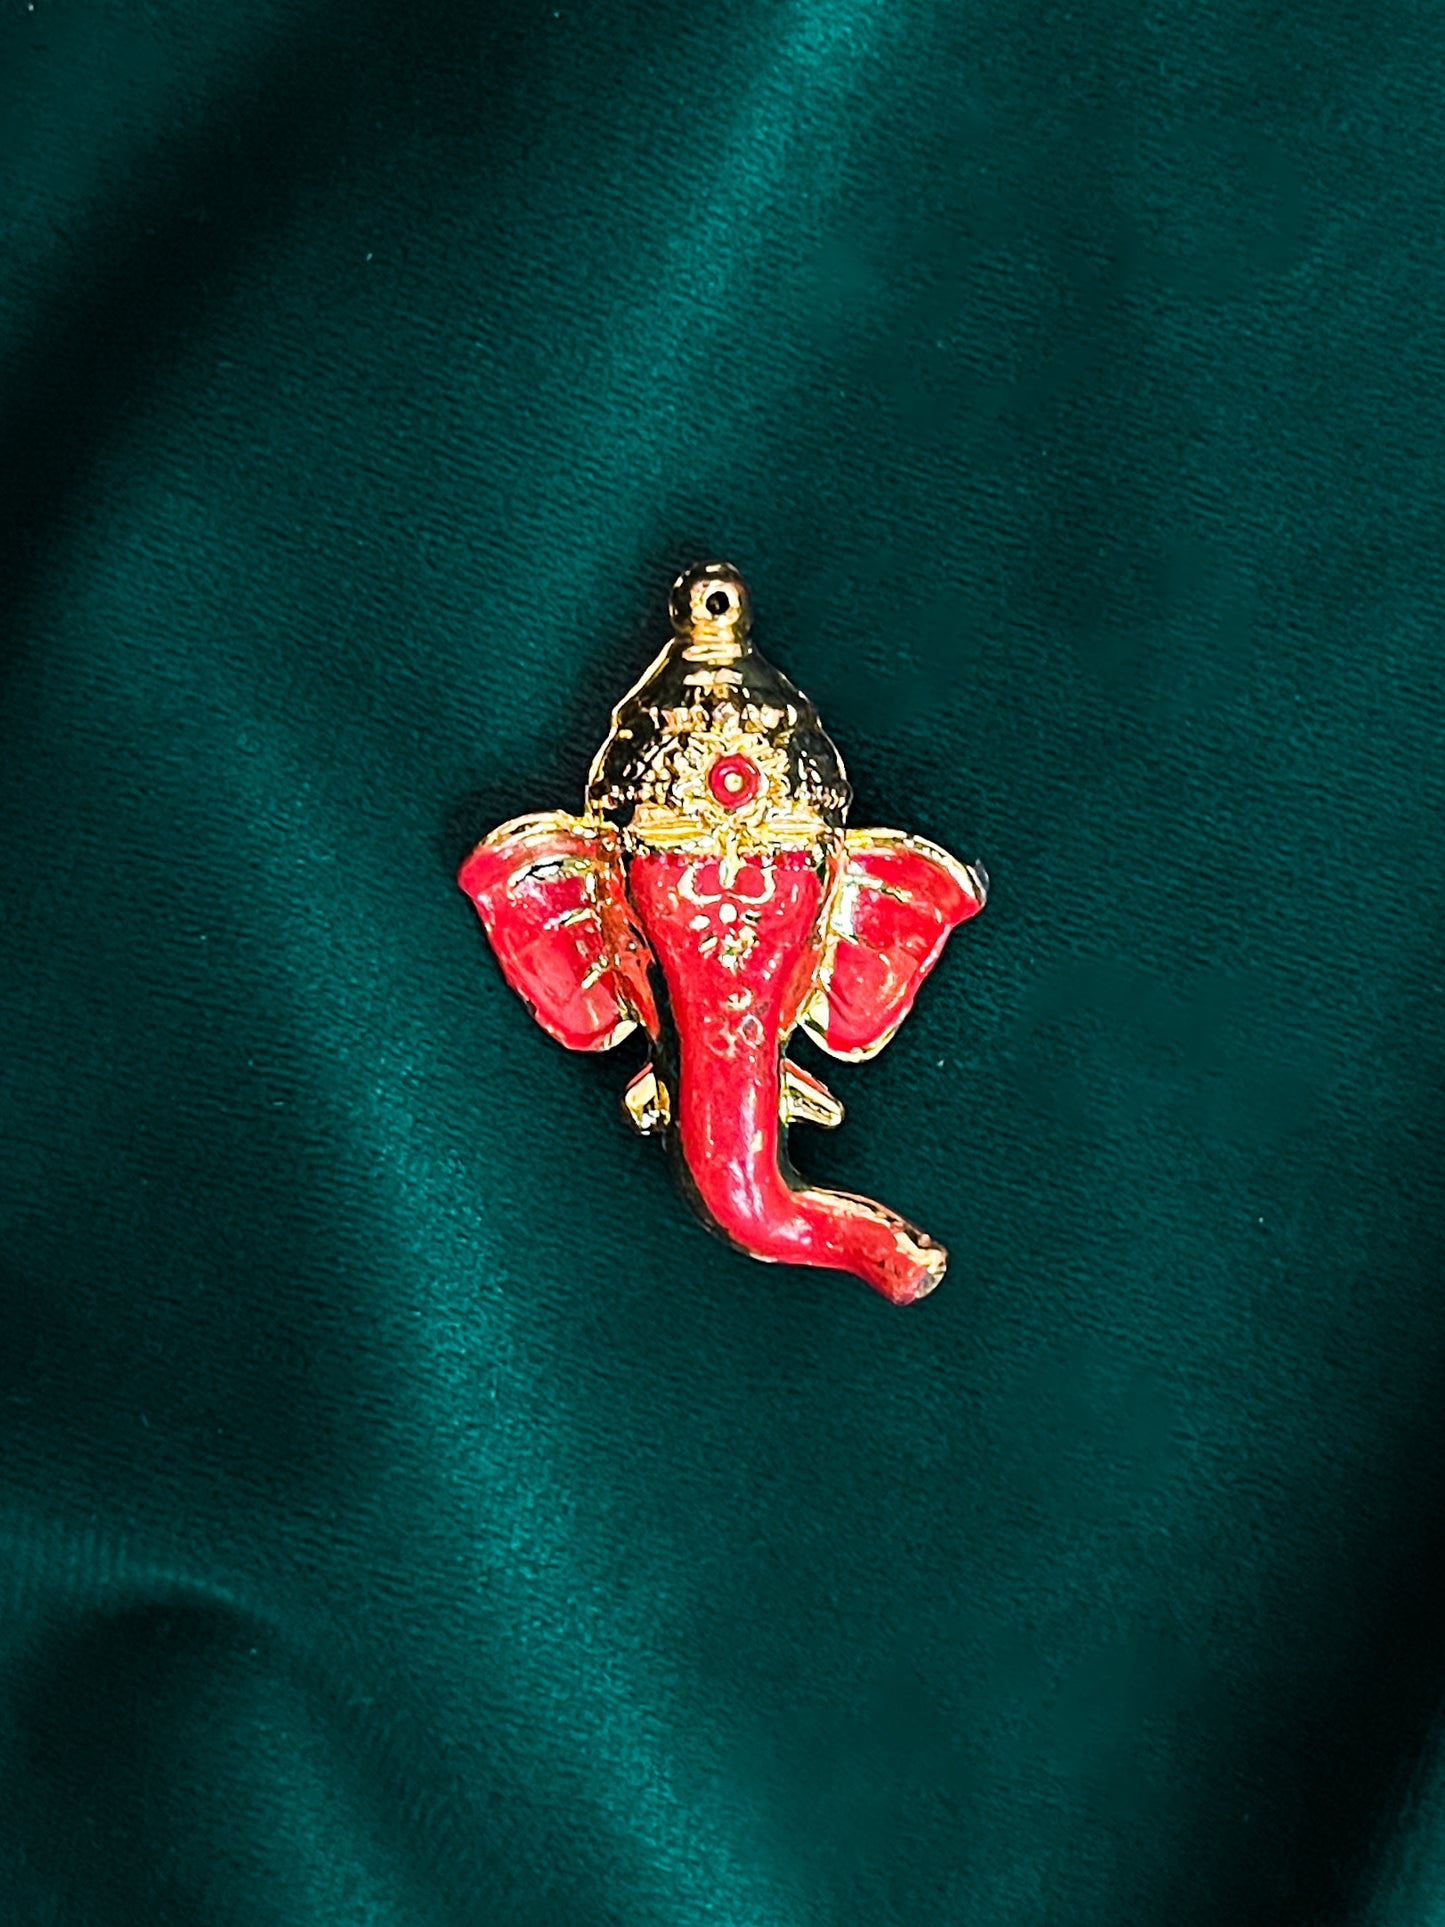 Ganesha Miniature (Set of 5)